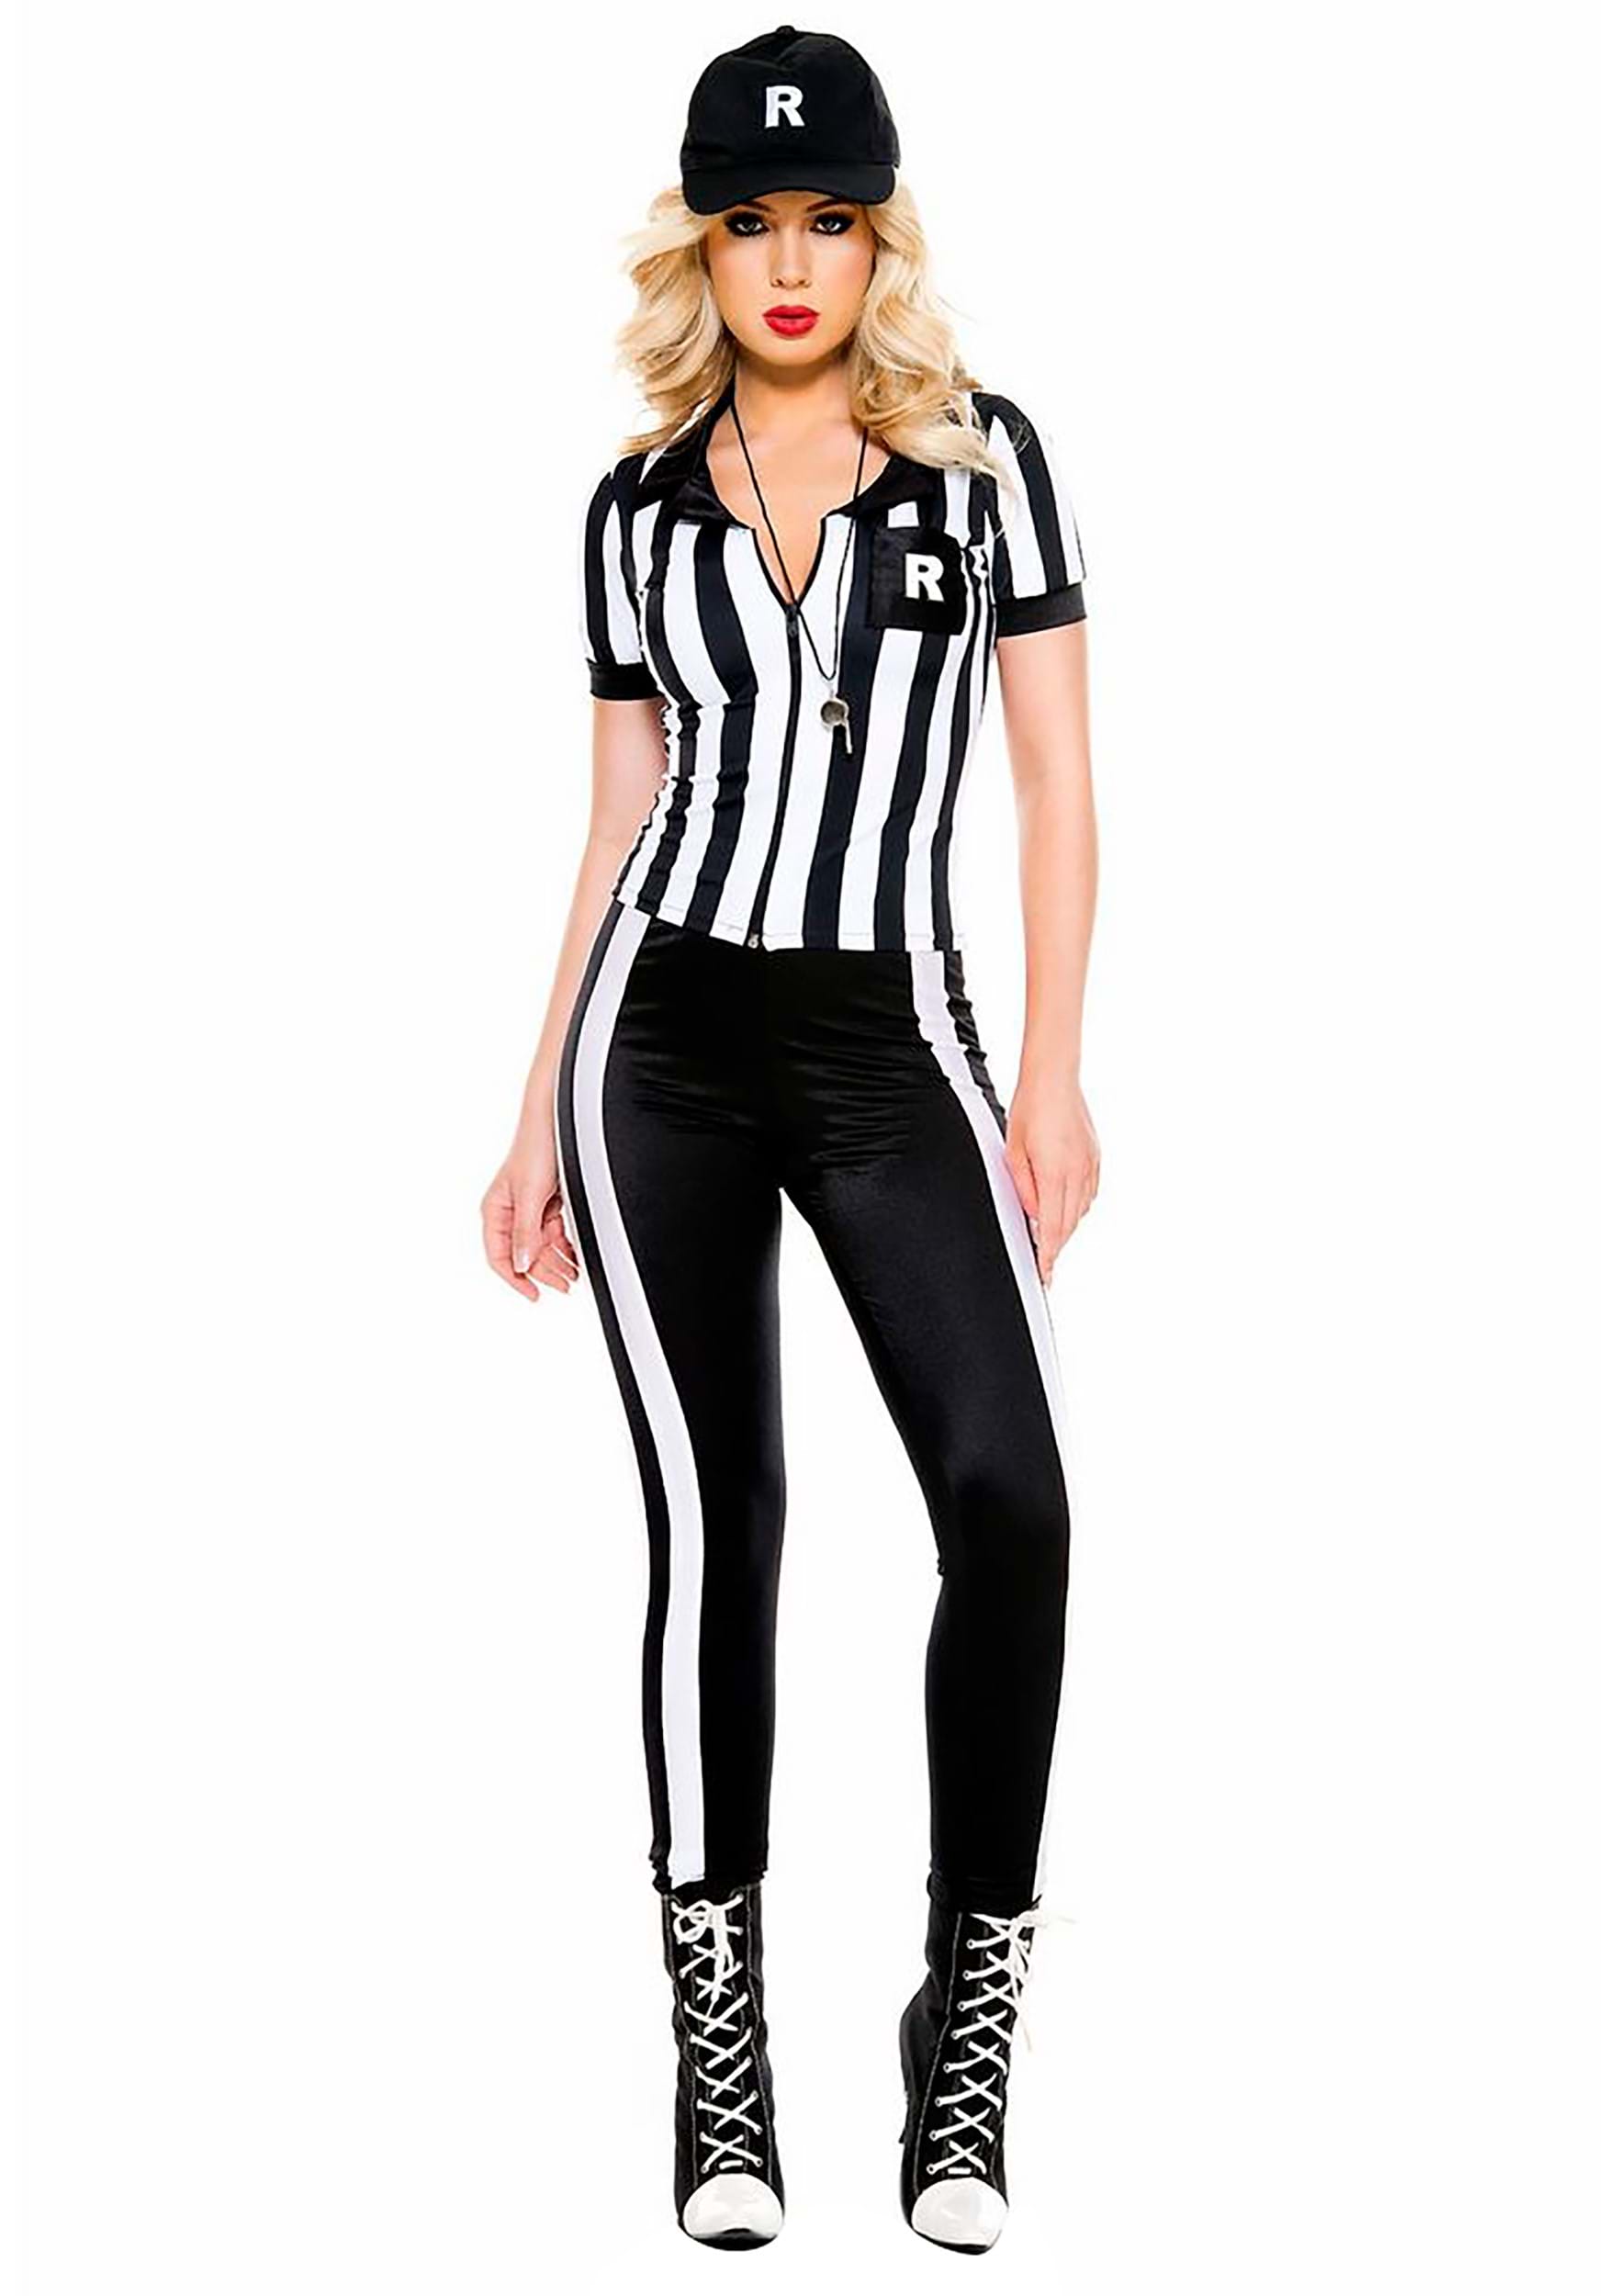 Women’s Half Time Referee Costume